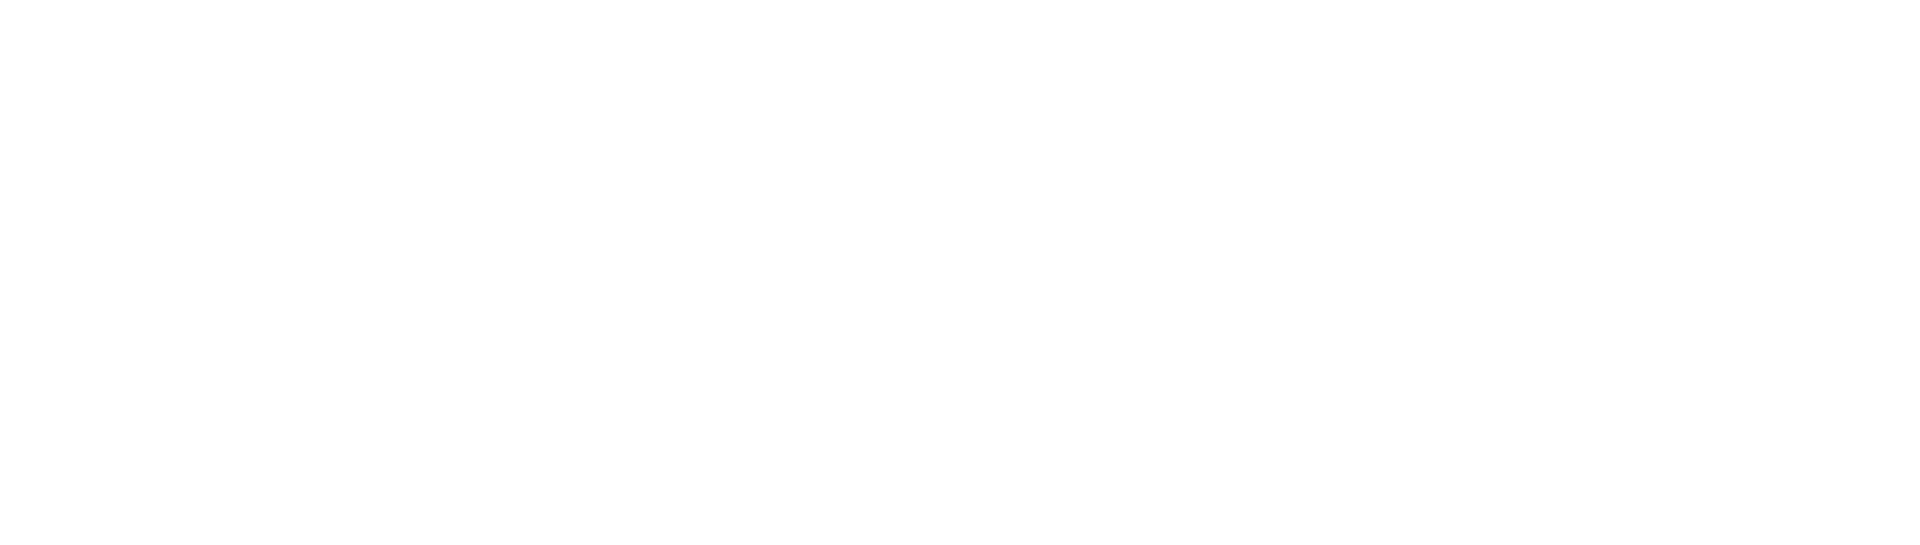 WWU Give Day 04.25.24